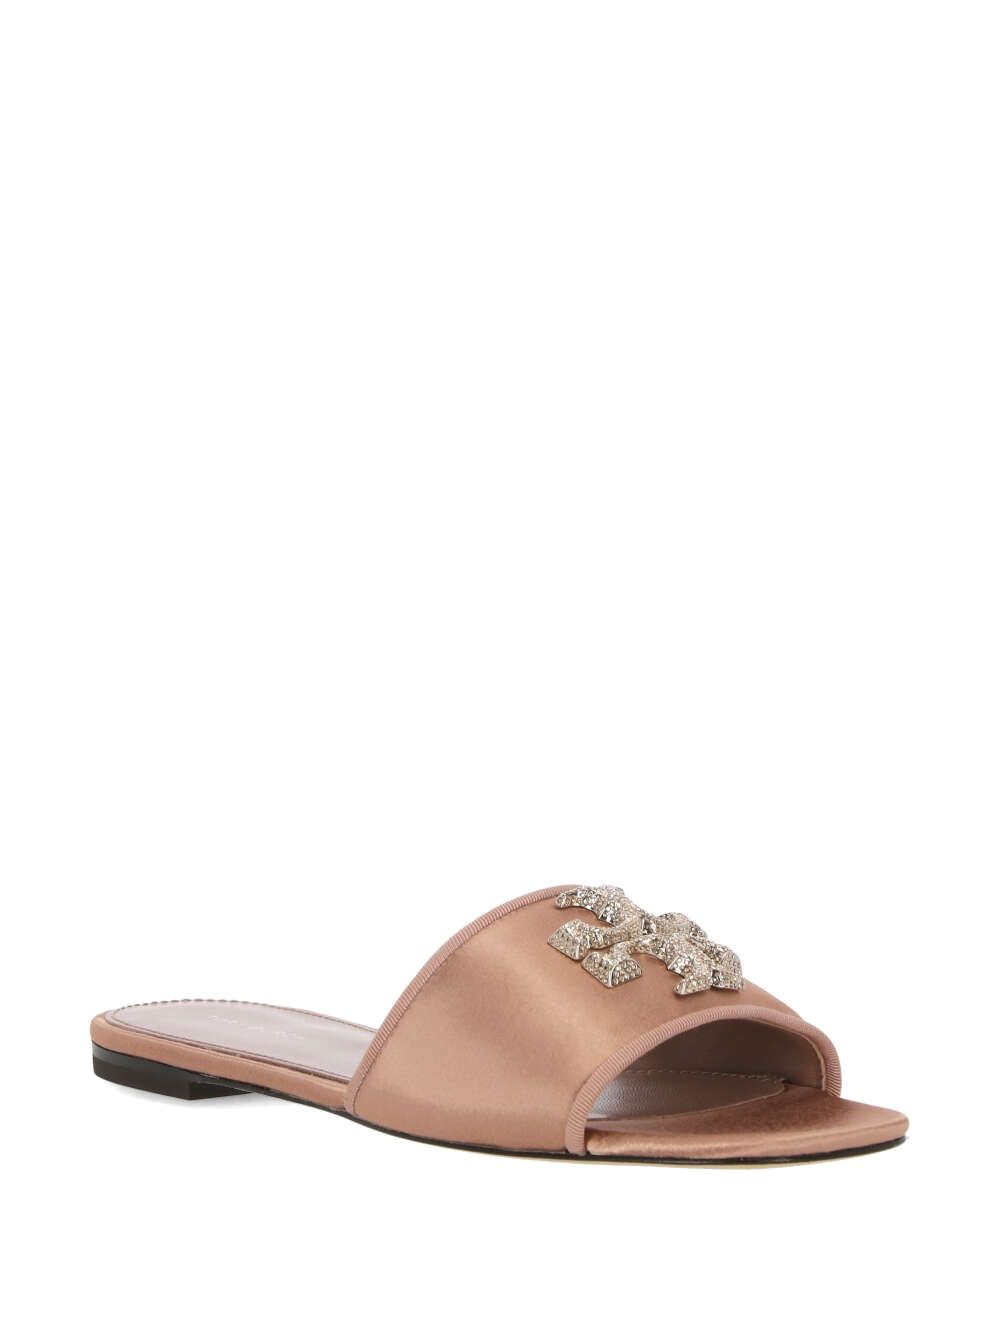 Eleanor slide sandals with rhinestones